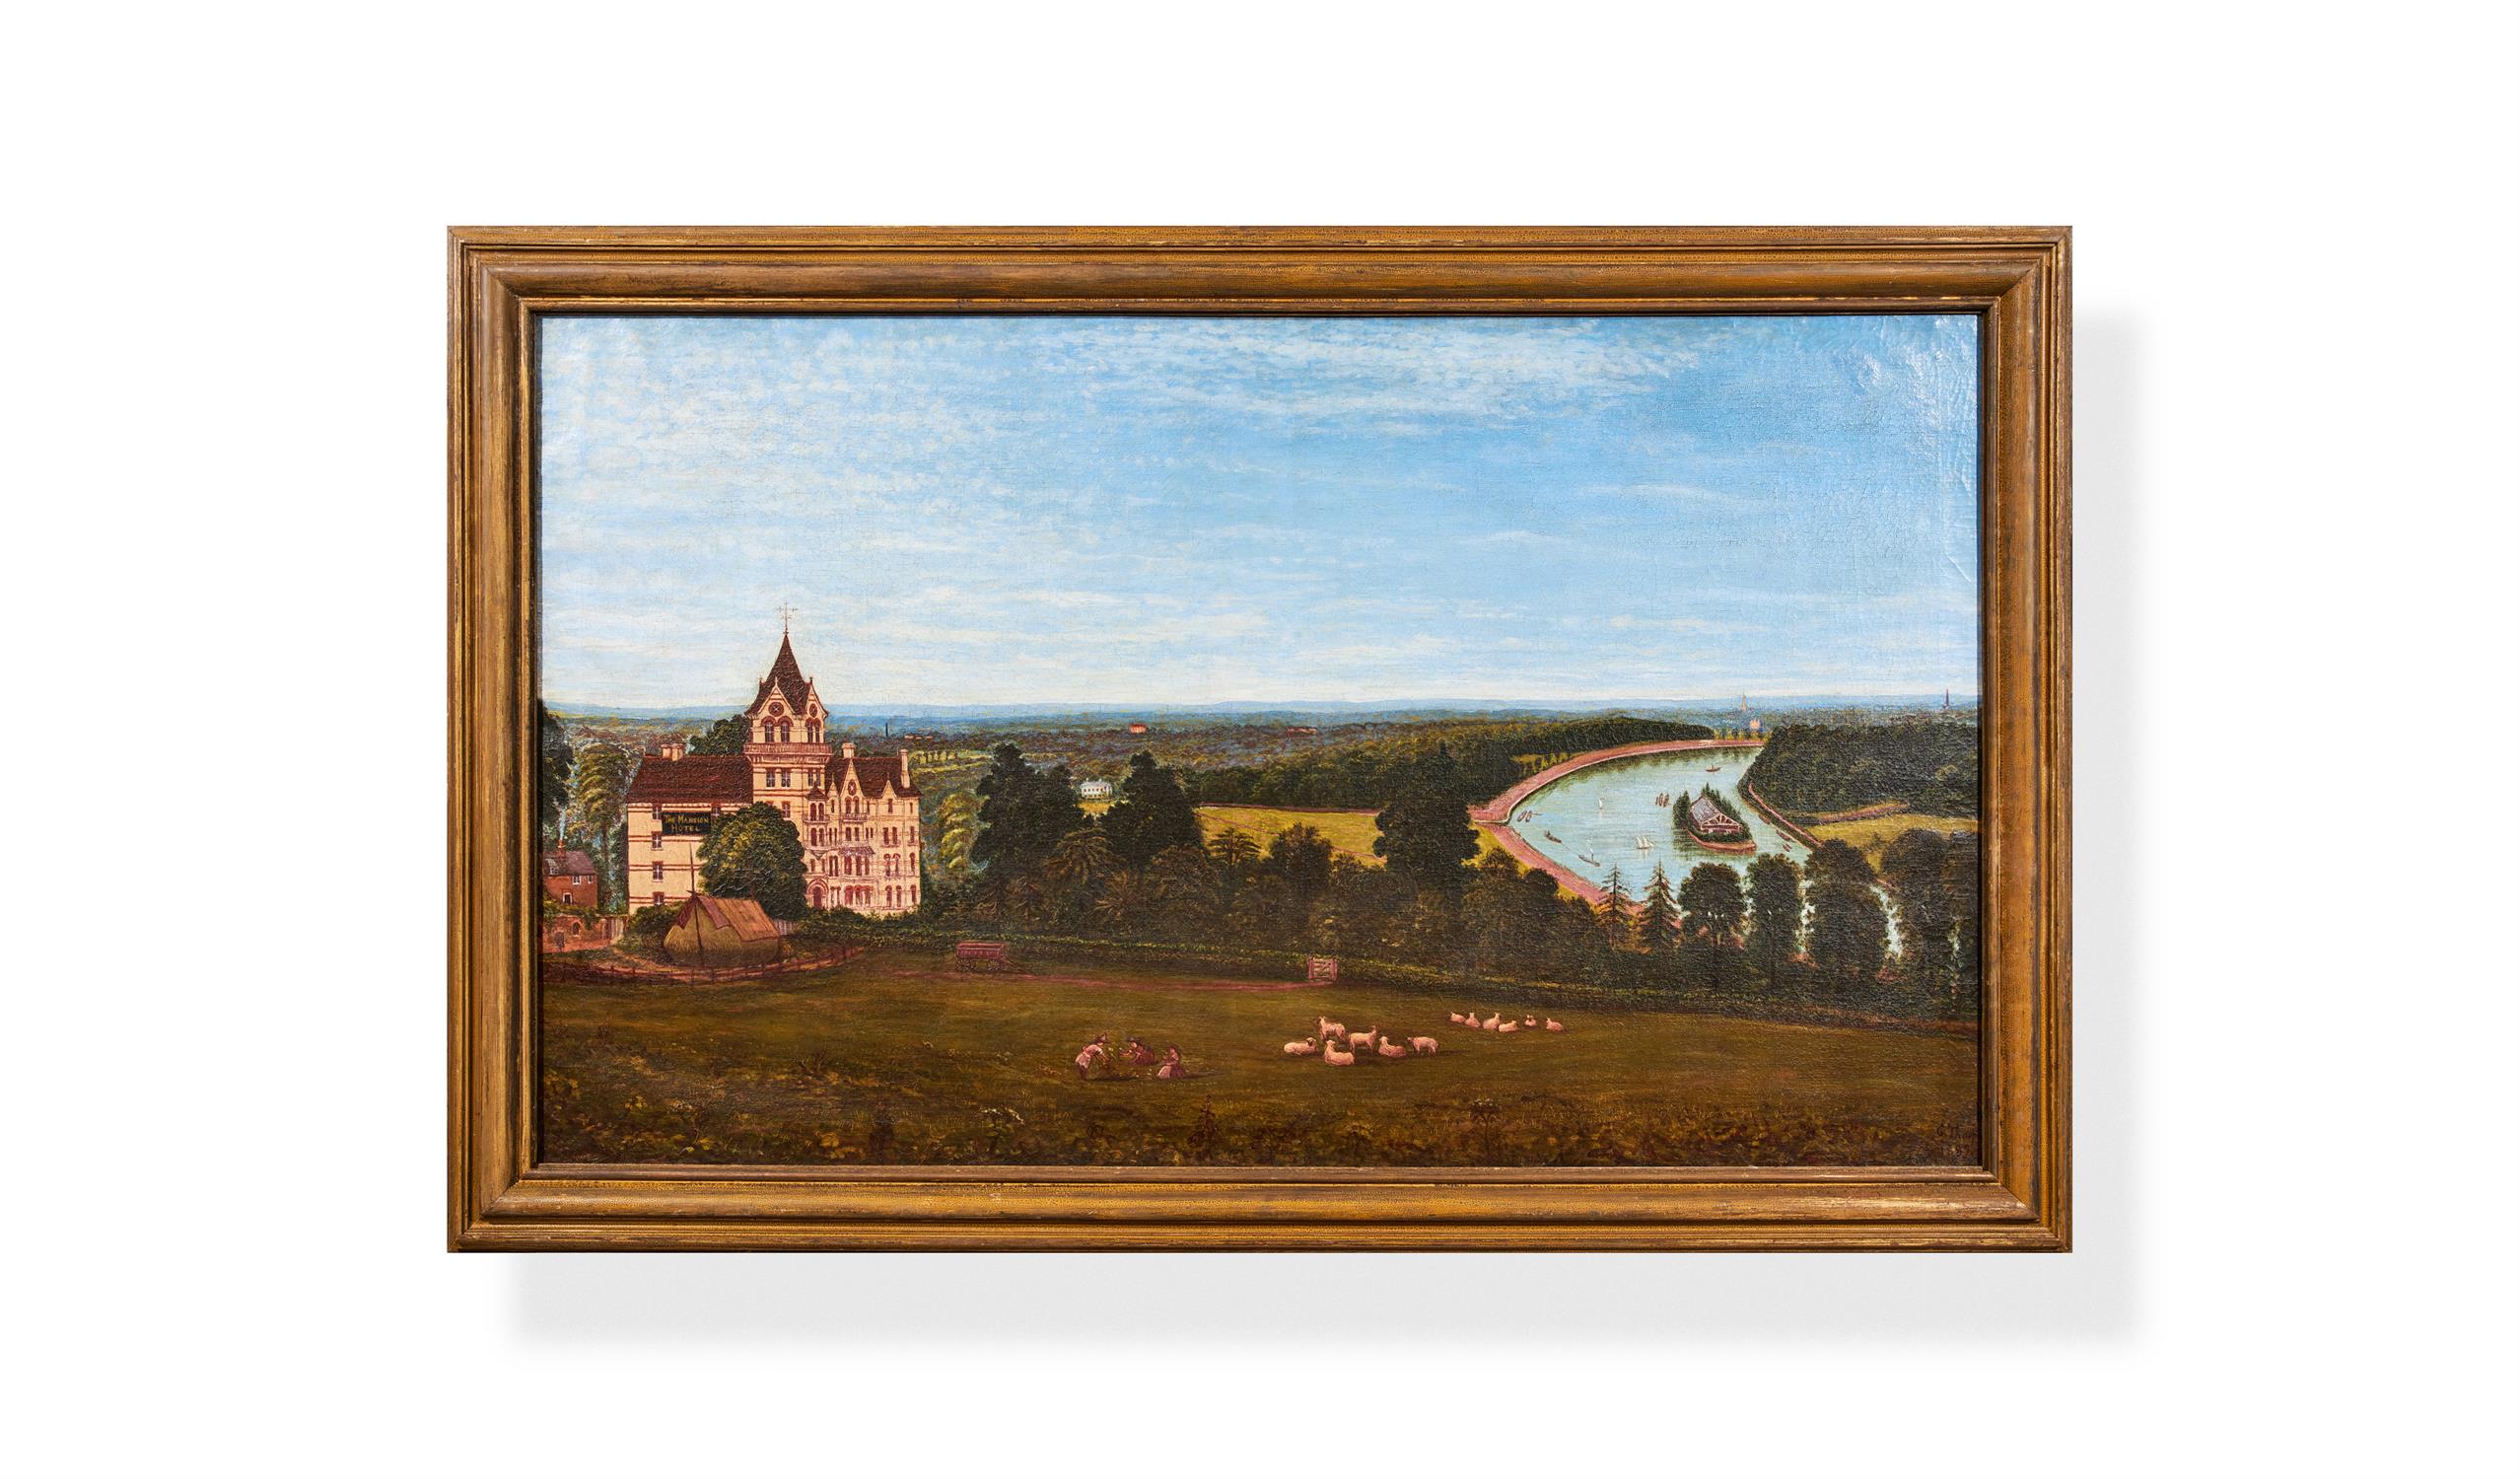 G*** Thorpe (British, 19th century), A view of Richmond looking towards Twickenham